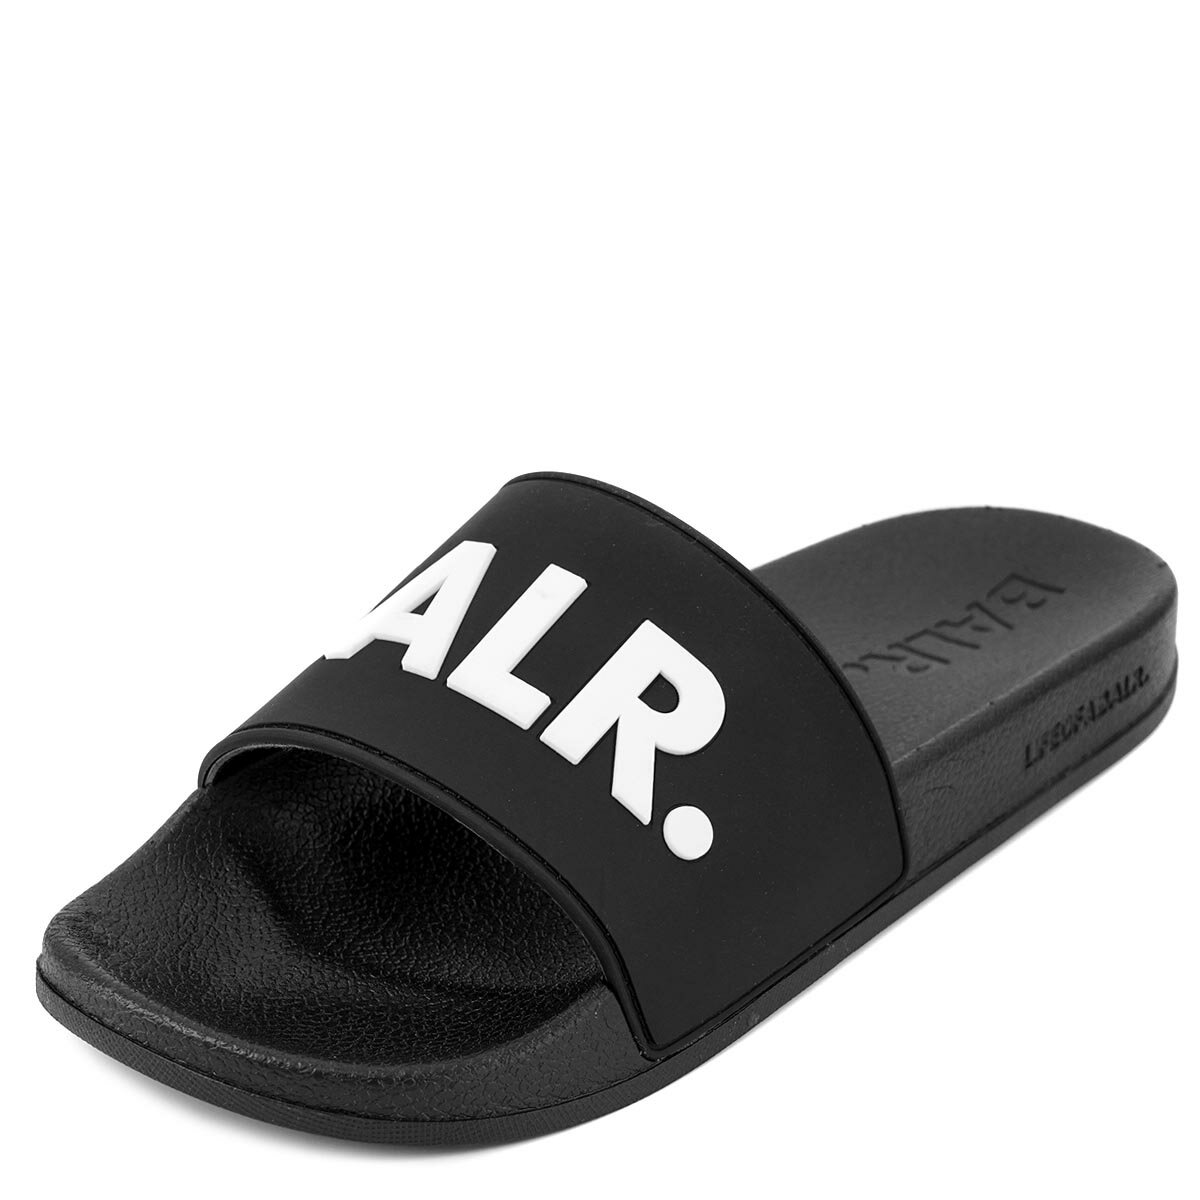 BALR. ボーラー シャワーサンダル B10247 BALR. Slider メンズ 男性 レディース 女性 スライドサンダル 靴